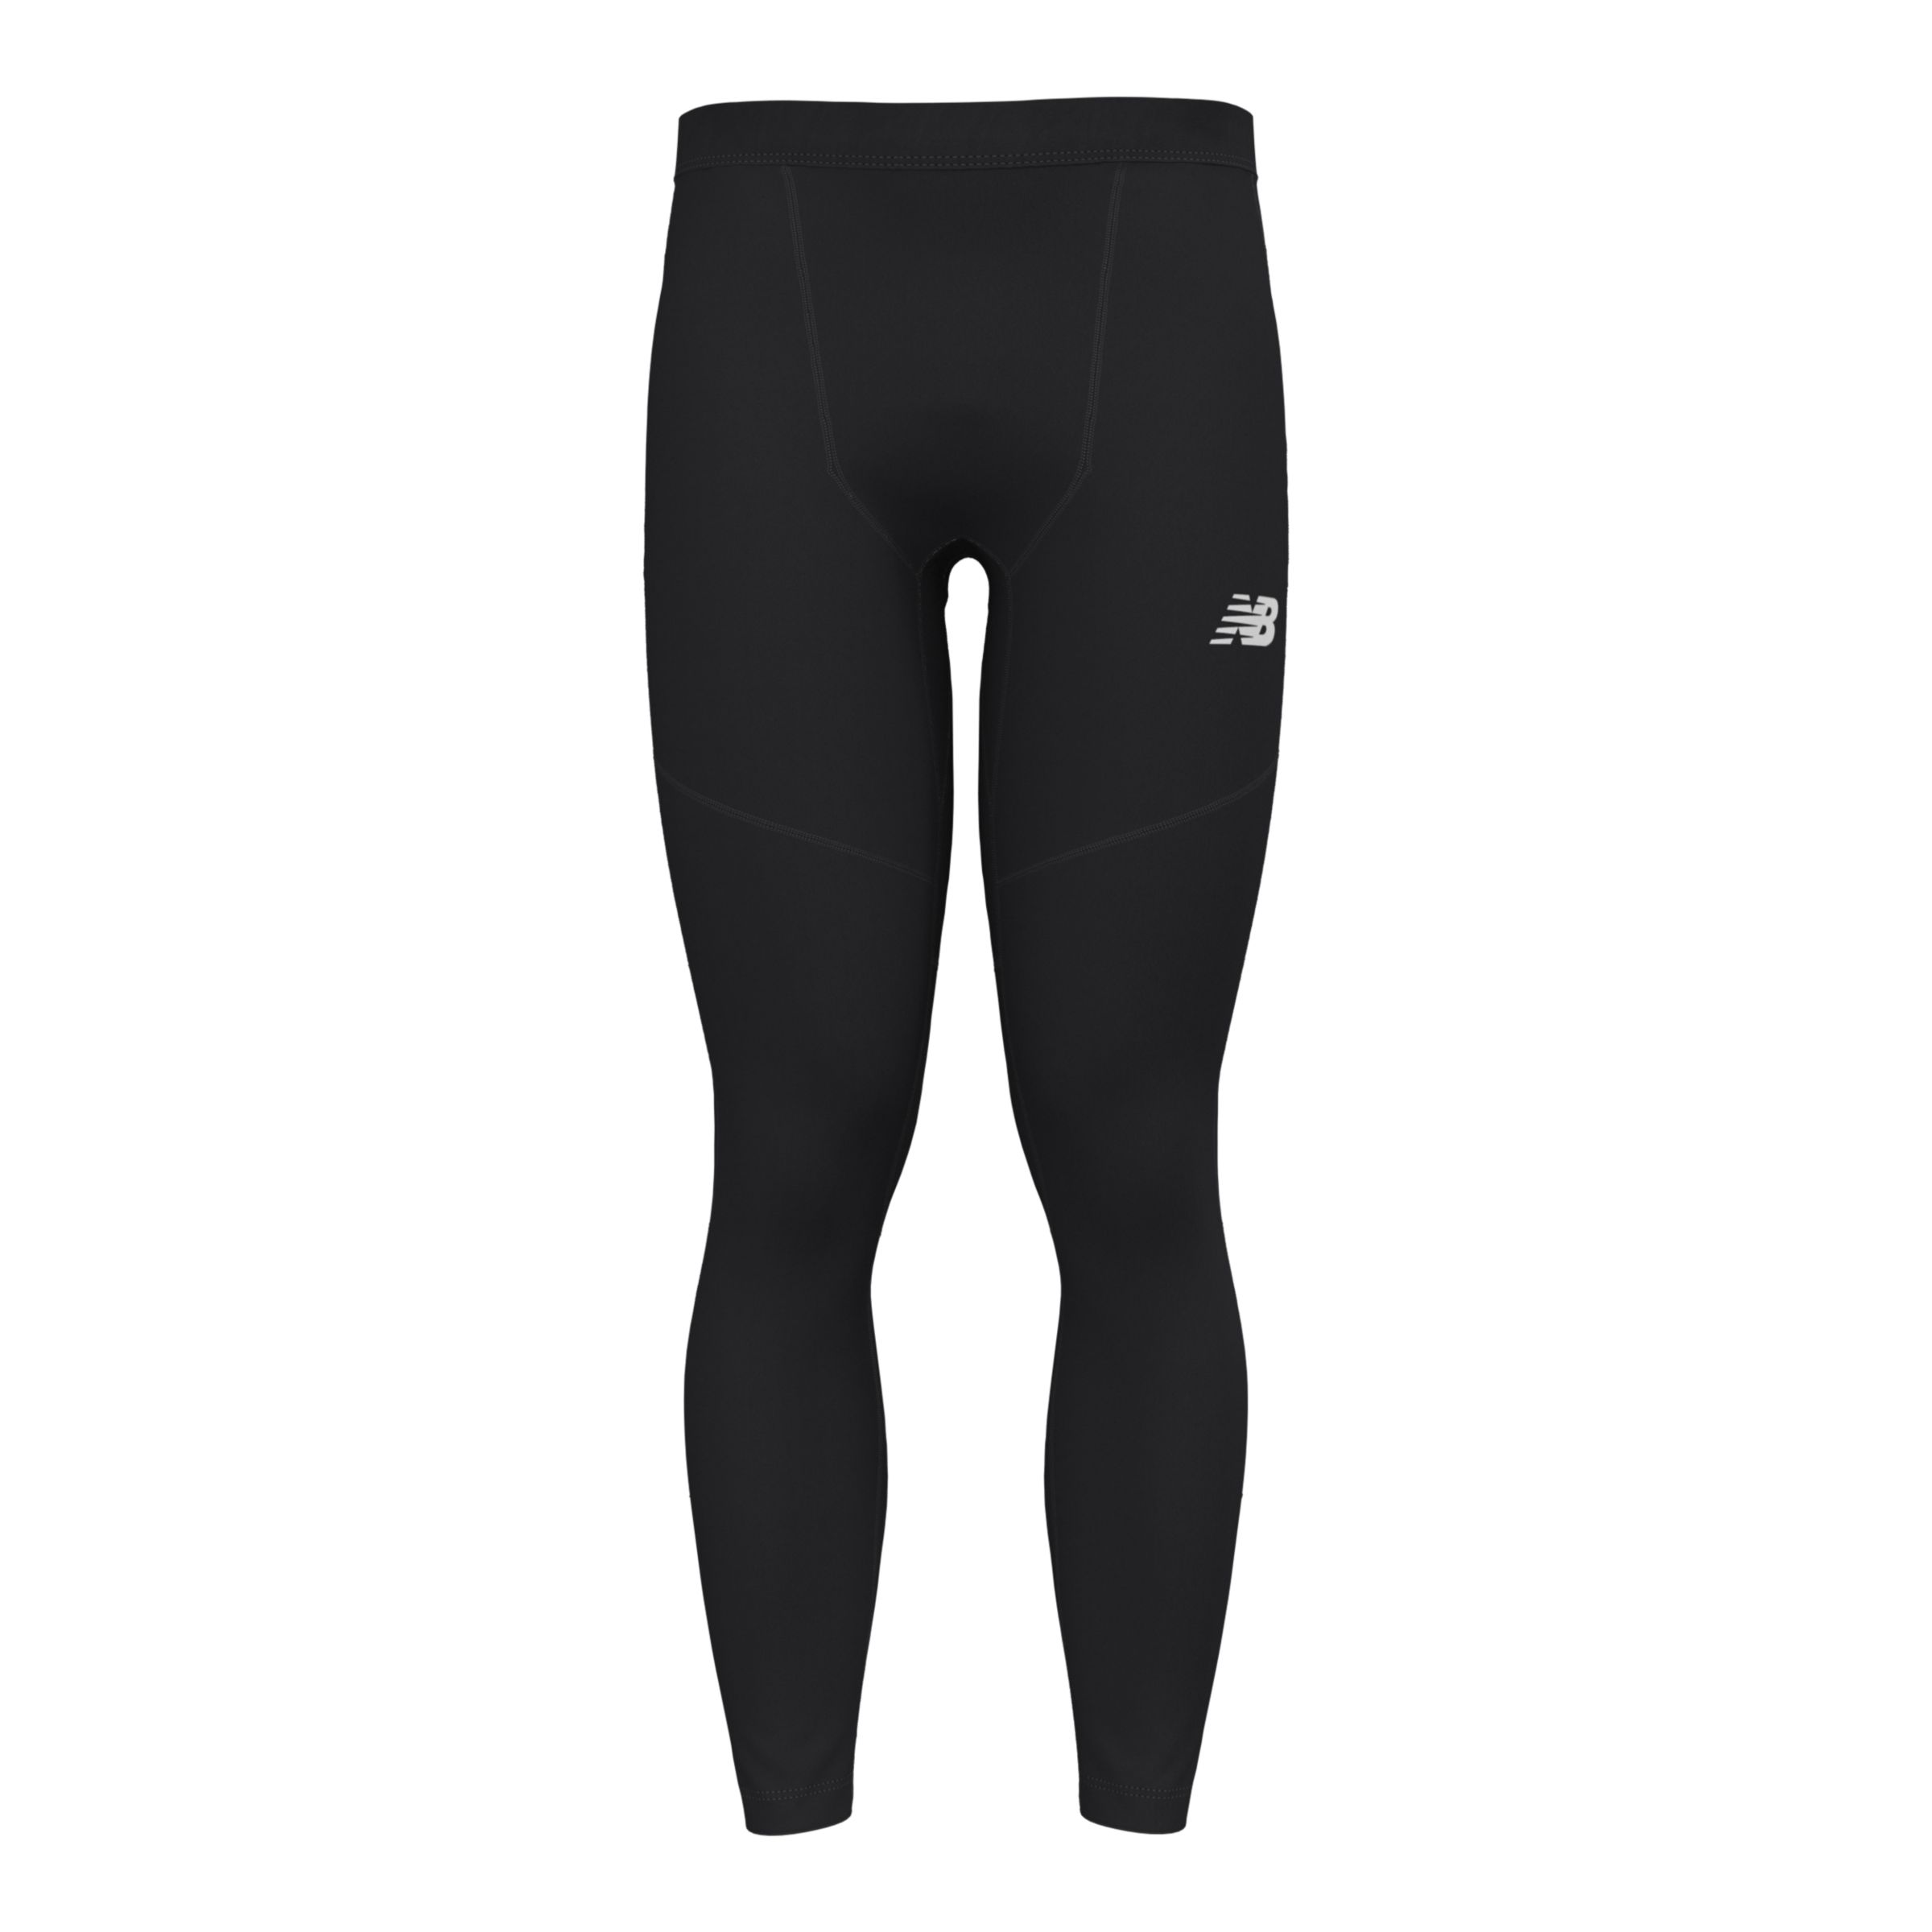 Etam Be+ women sport 3/4 grey pant size S new